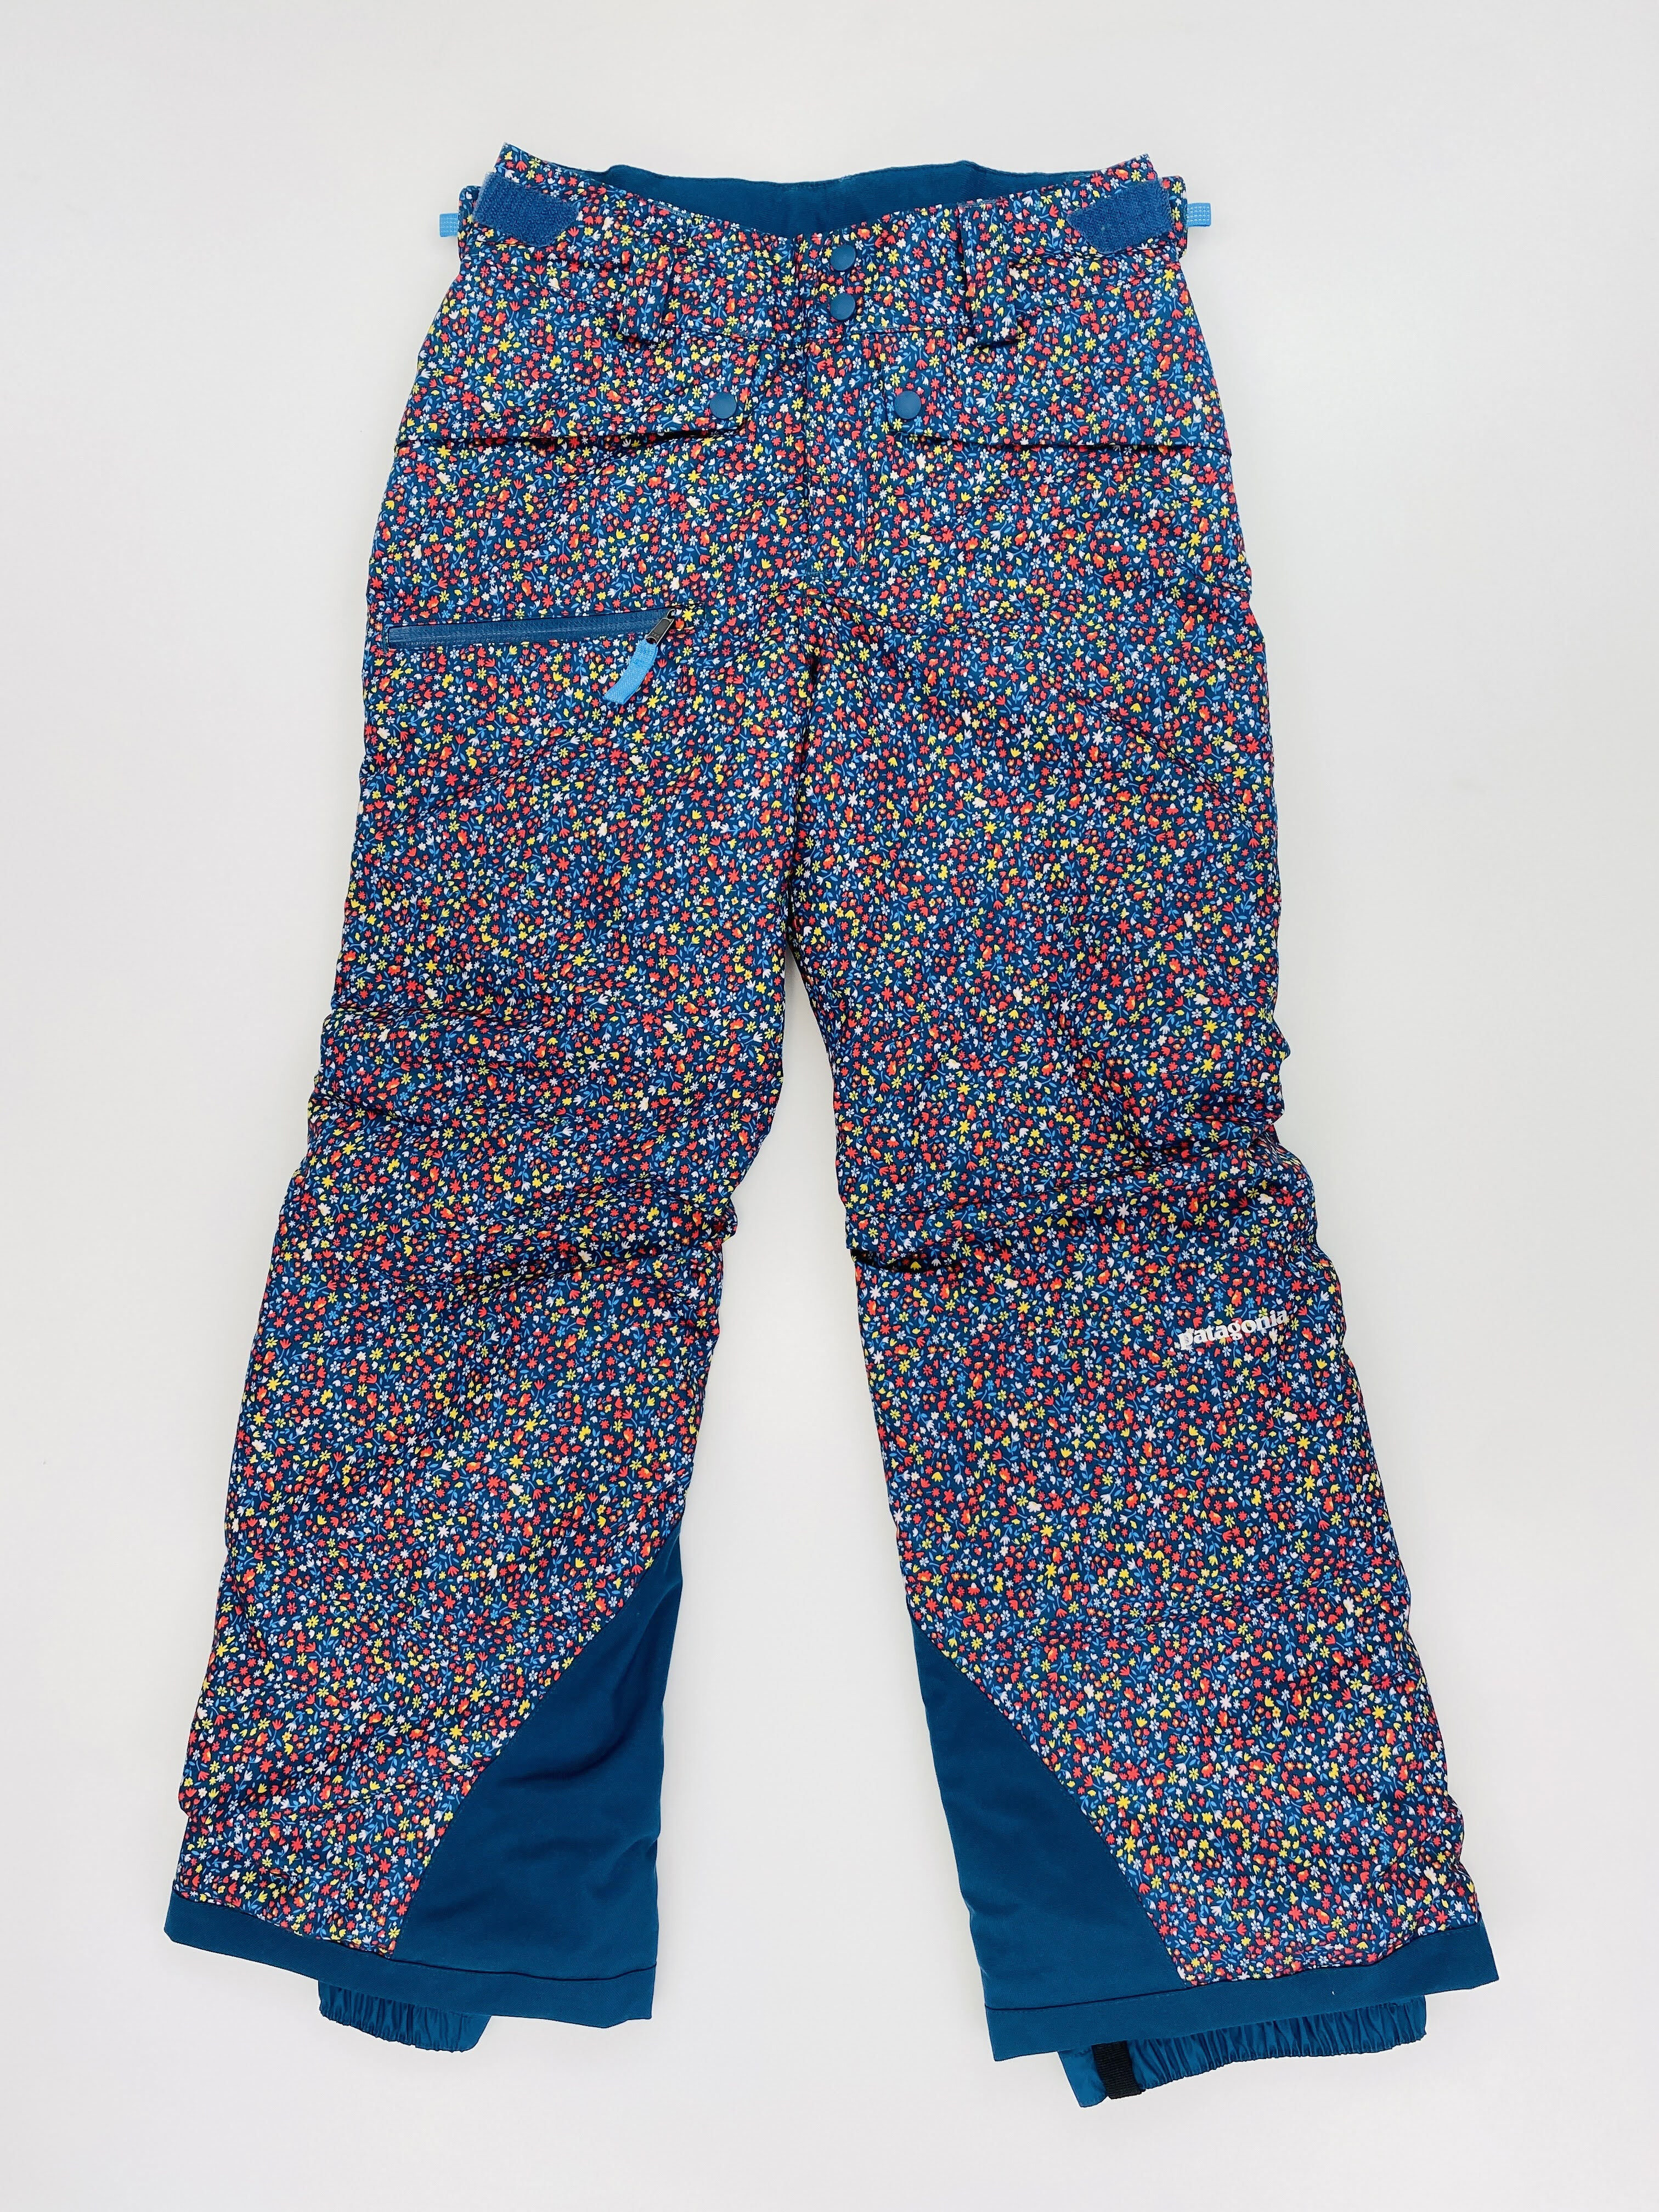 Patagonia Girls' Snowbelle Pants - Seconde main Pantalon ski enfant - Multicolore - M | Hardloop